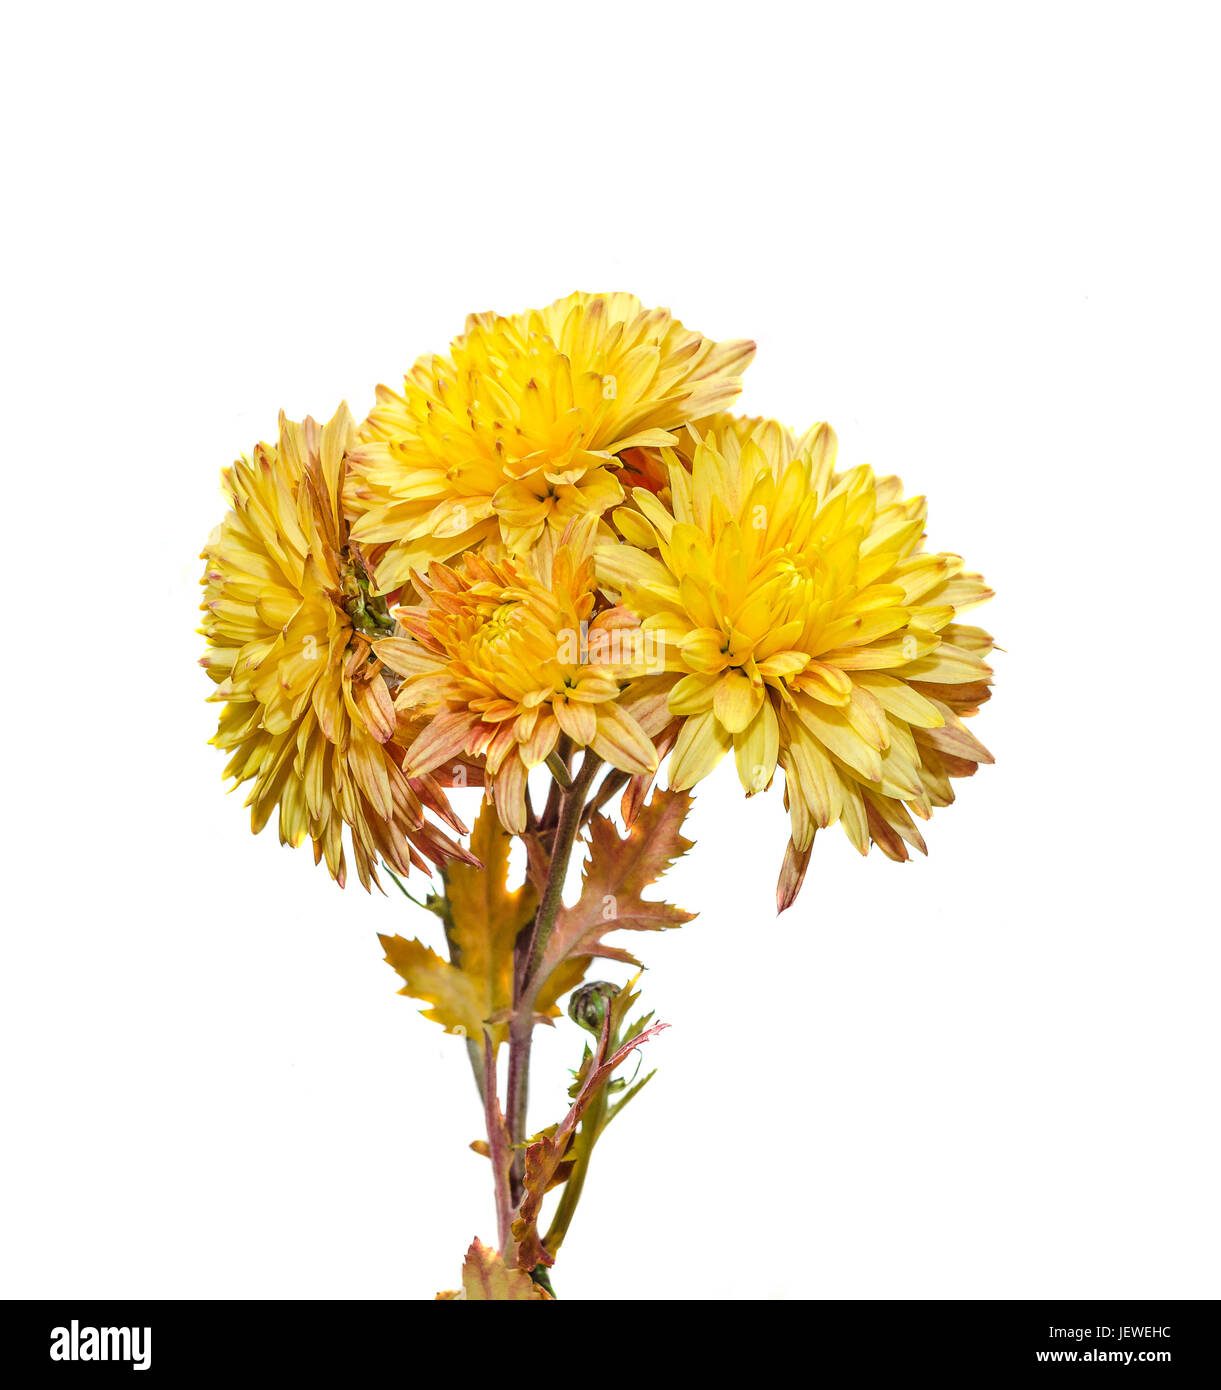 Yellow, orange Chrysanthemum flowers, mums or chrysanths, genus Chrysanthemum in the family Asteraceae, in romanian known as 'Dumitrite', close up. Stock Photo